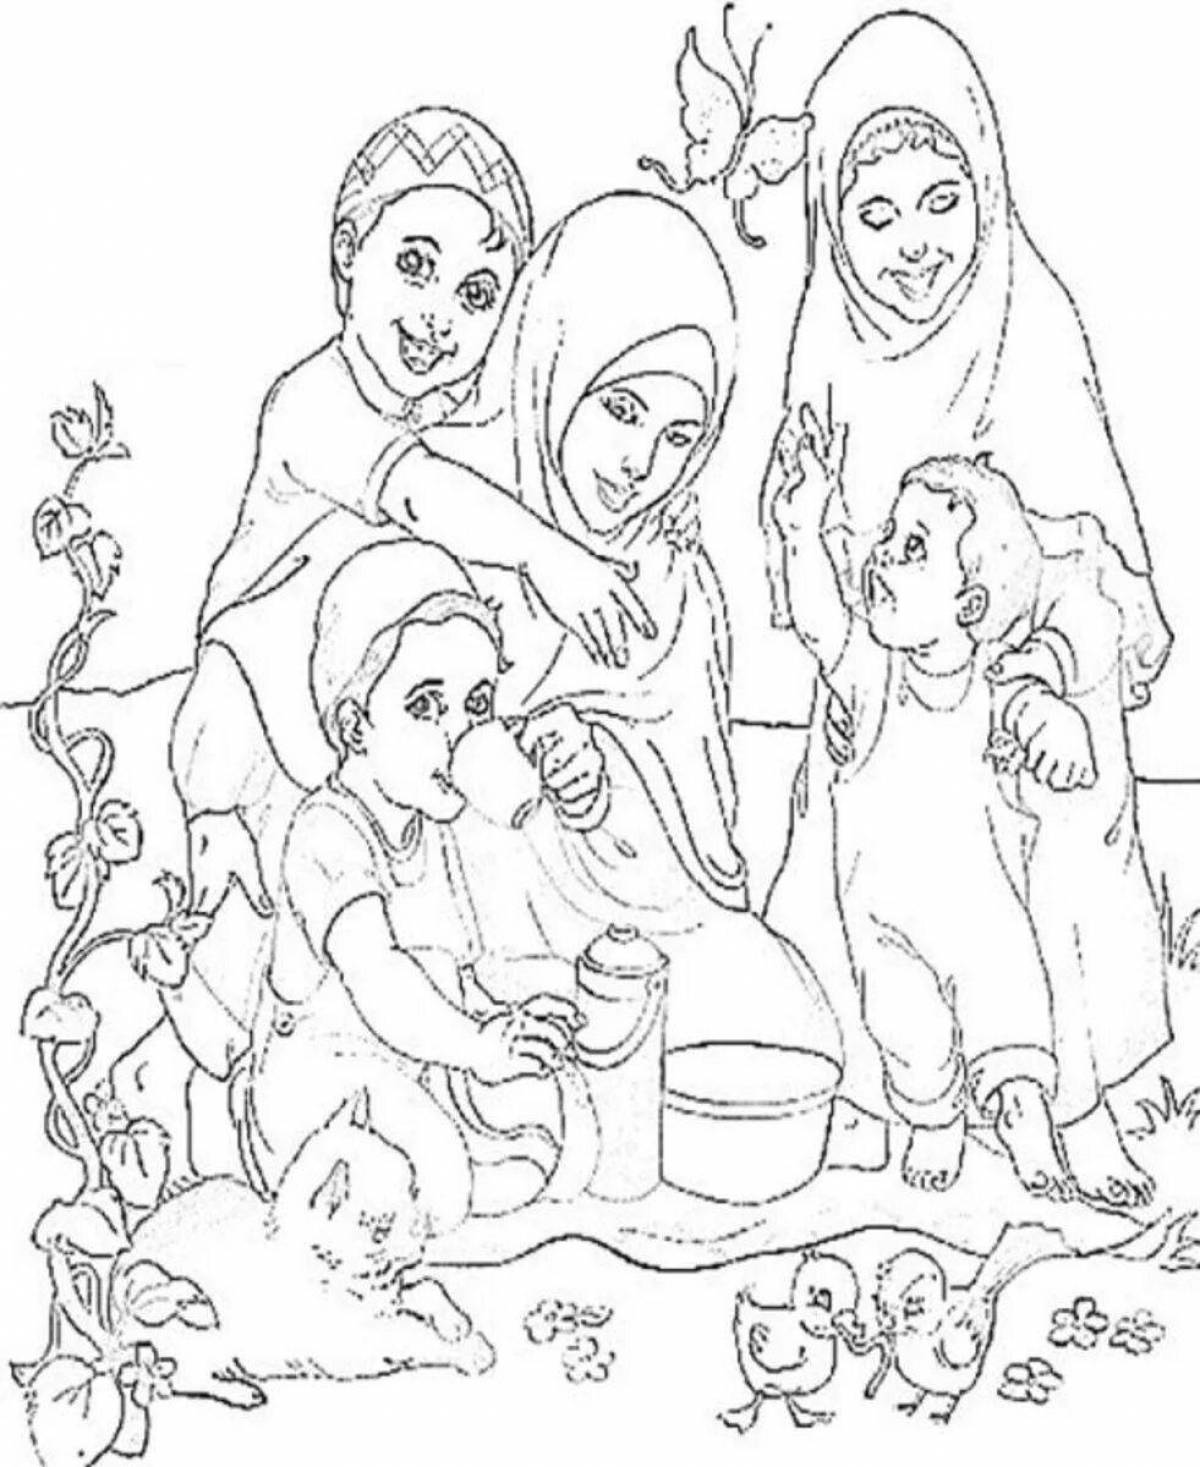 Muslim family #6